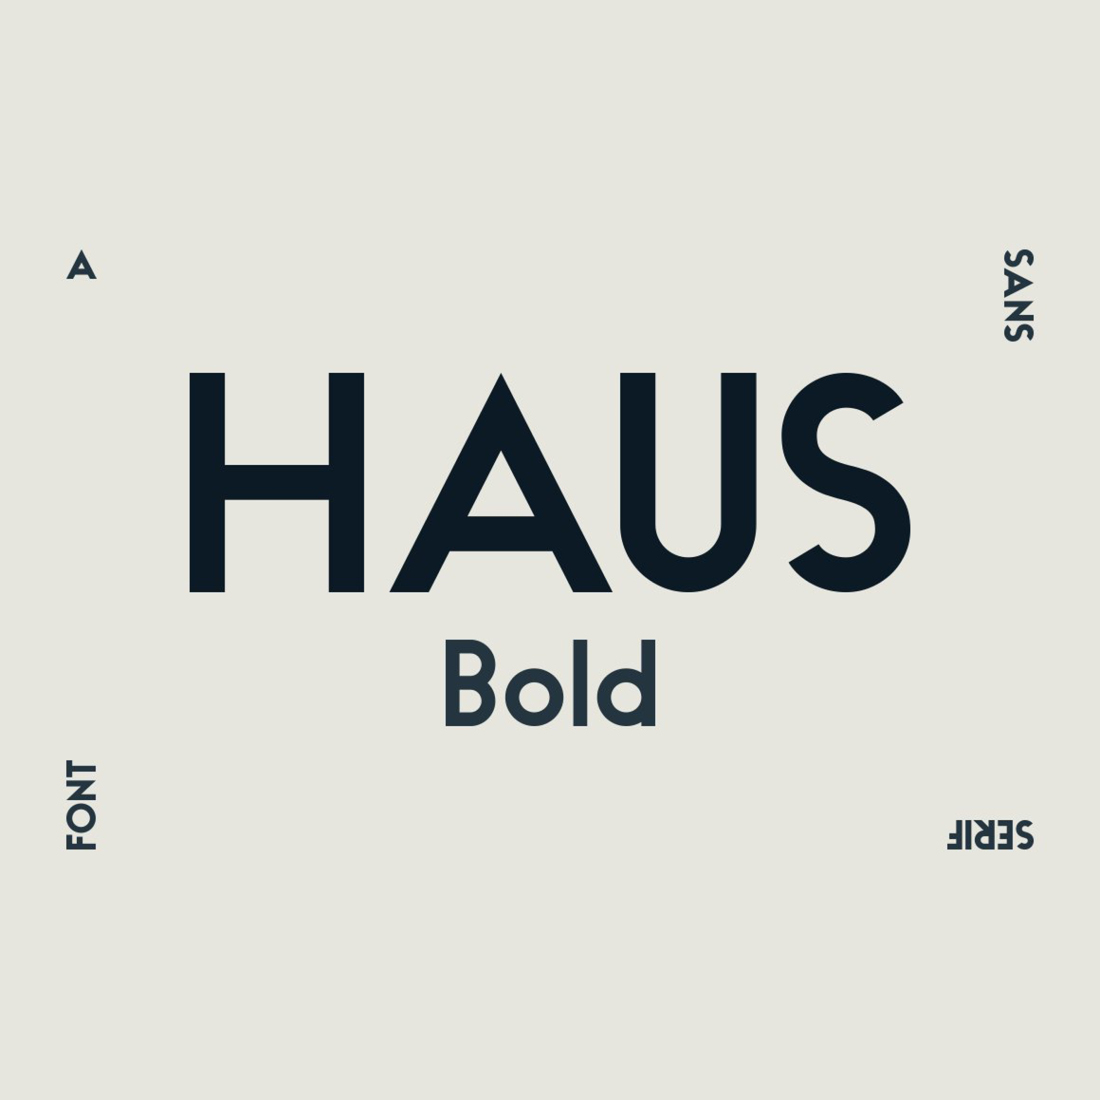 HAUS Sans Bold cover image.